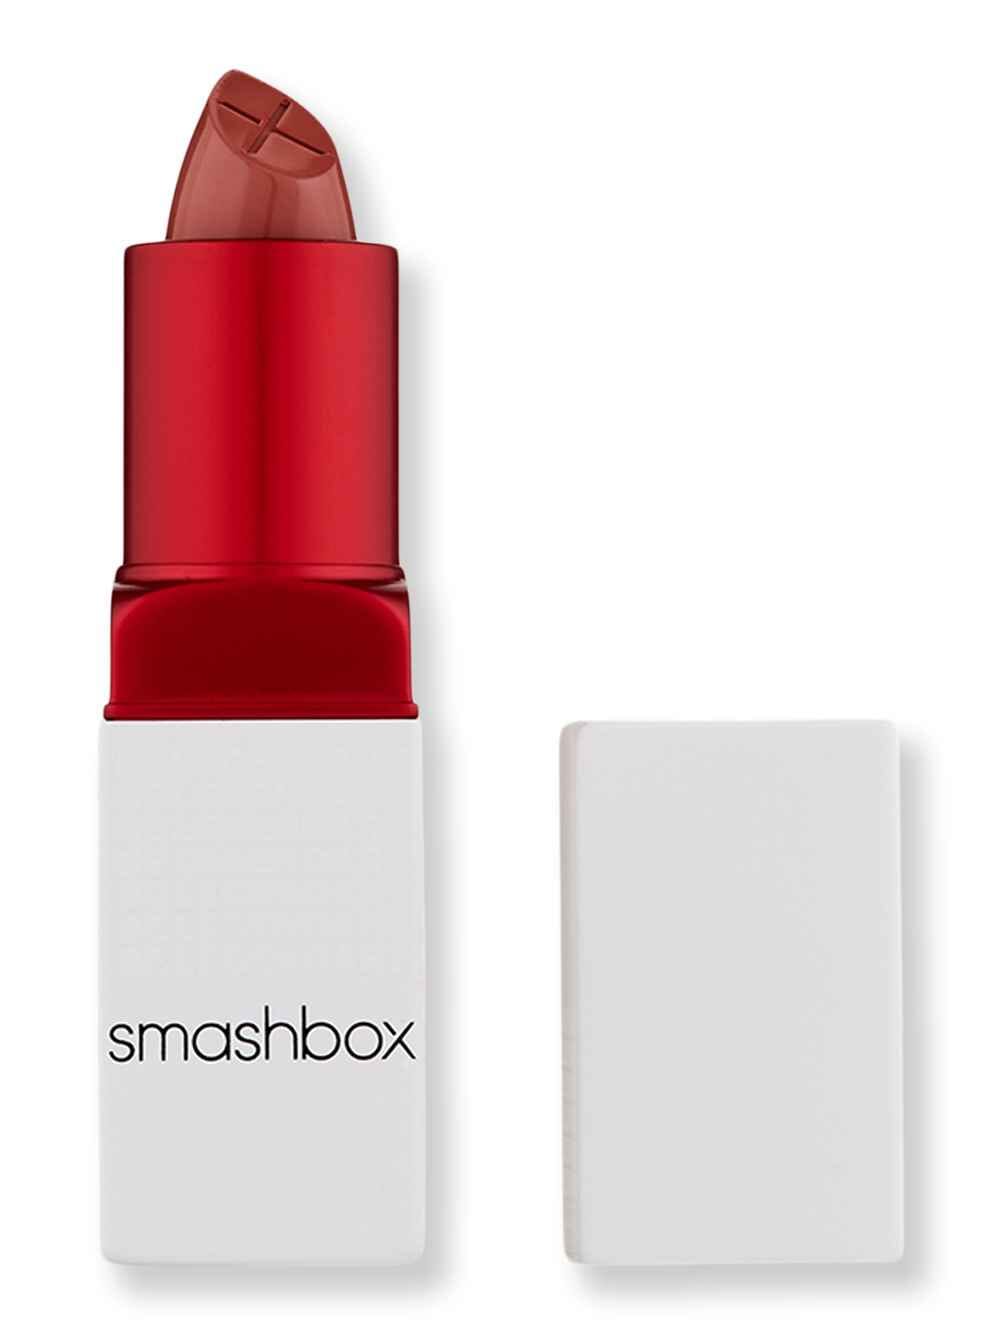 Smashbox Smashbox Be Legendary Prime & Plush Lipstick .11 oz3.4 gmLevel Up Lipstick, Lip Gloss, & Lip Liners 